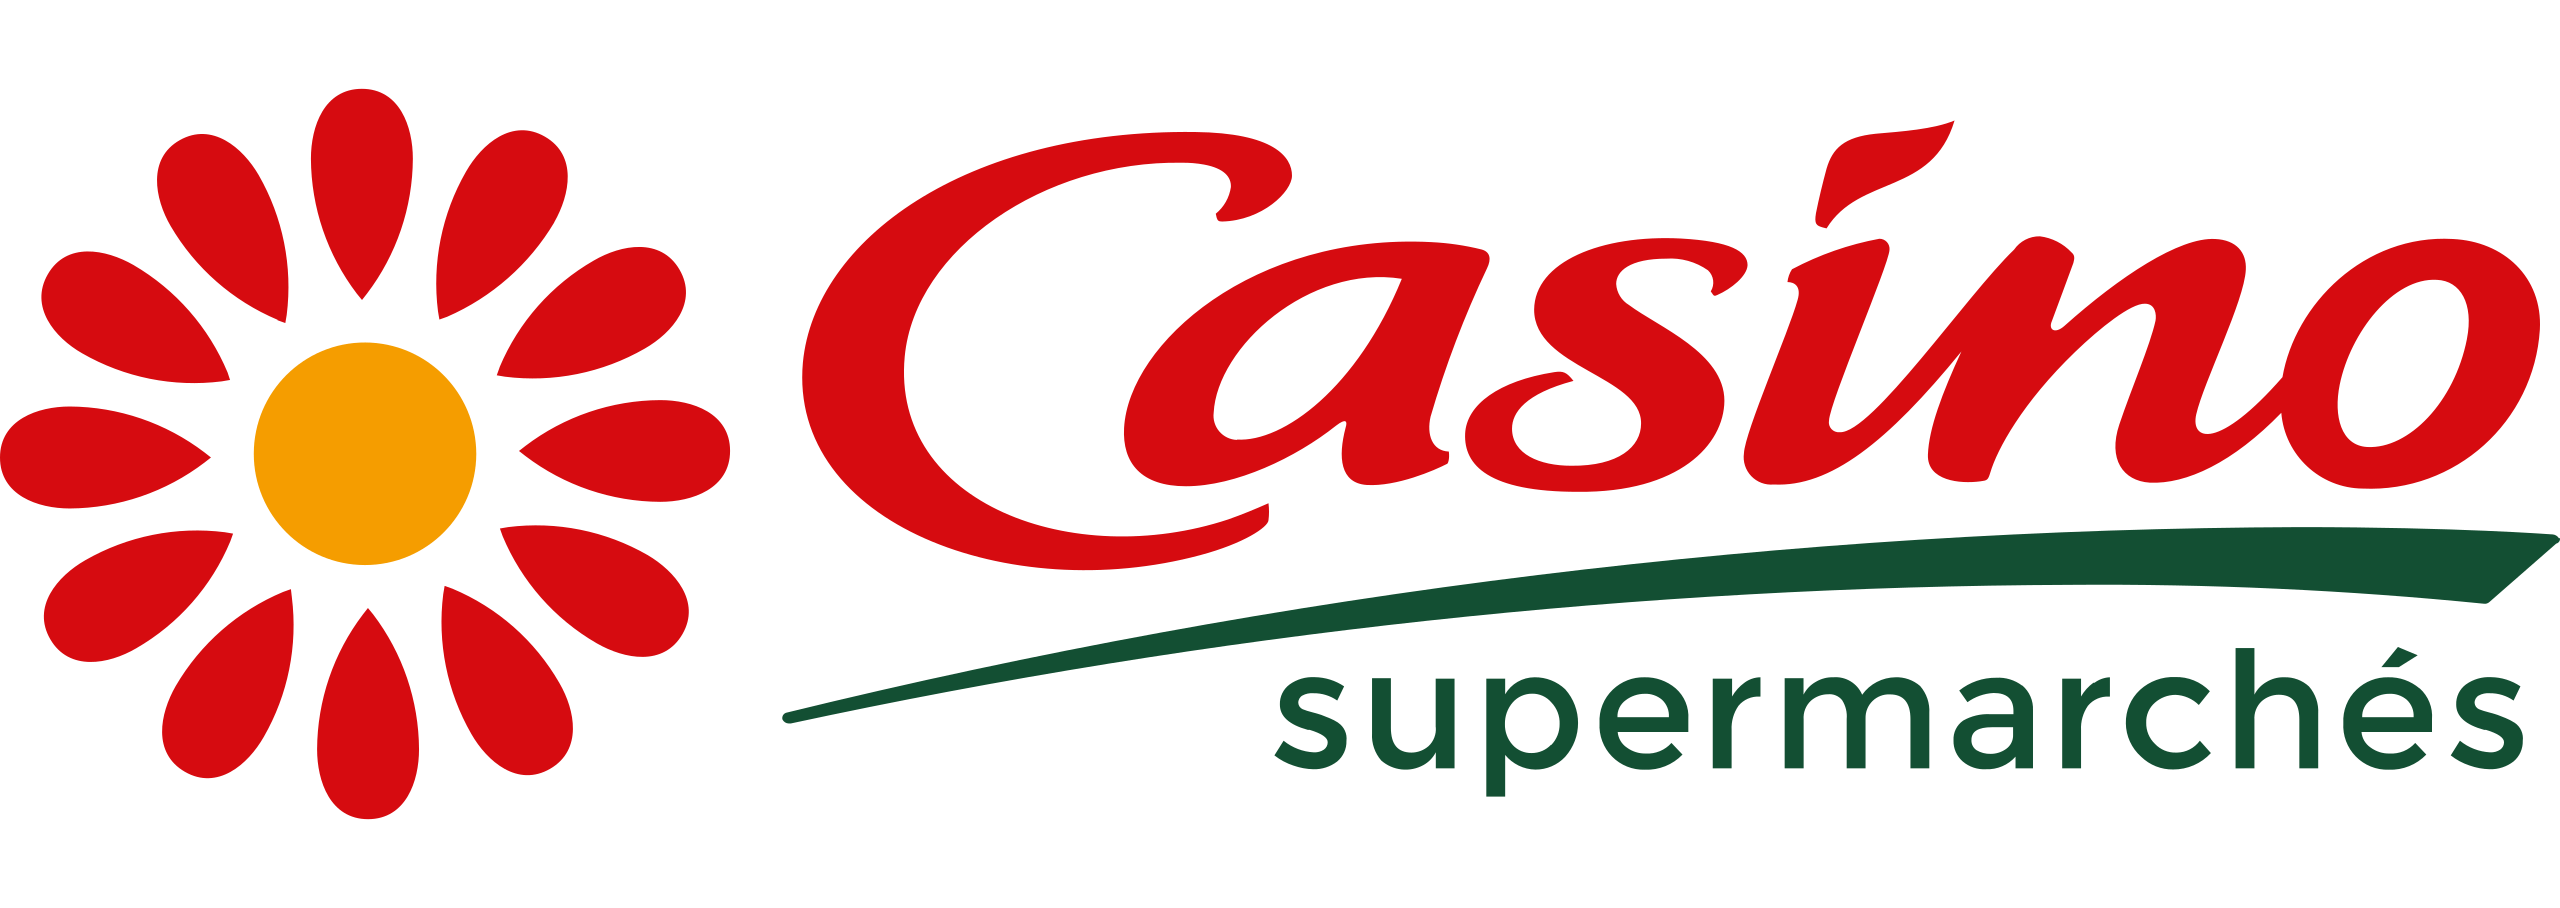 Logo Casino